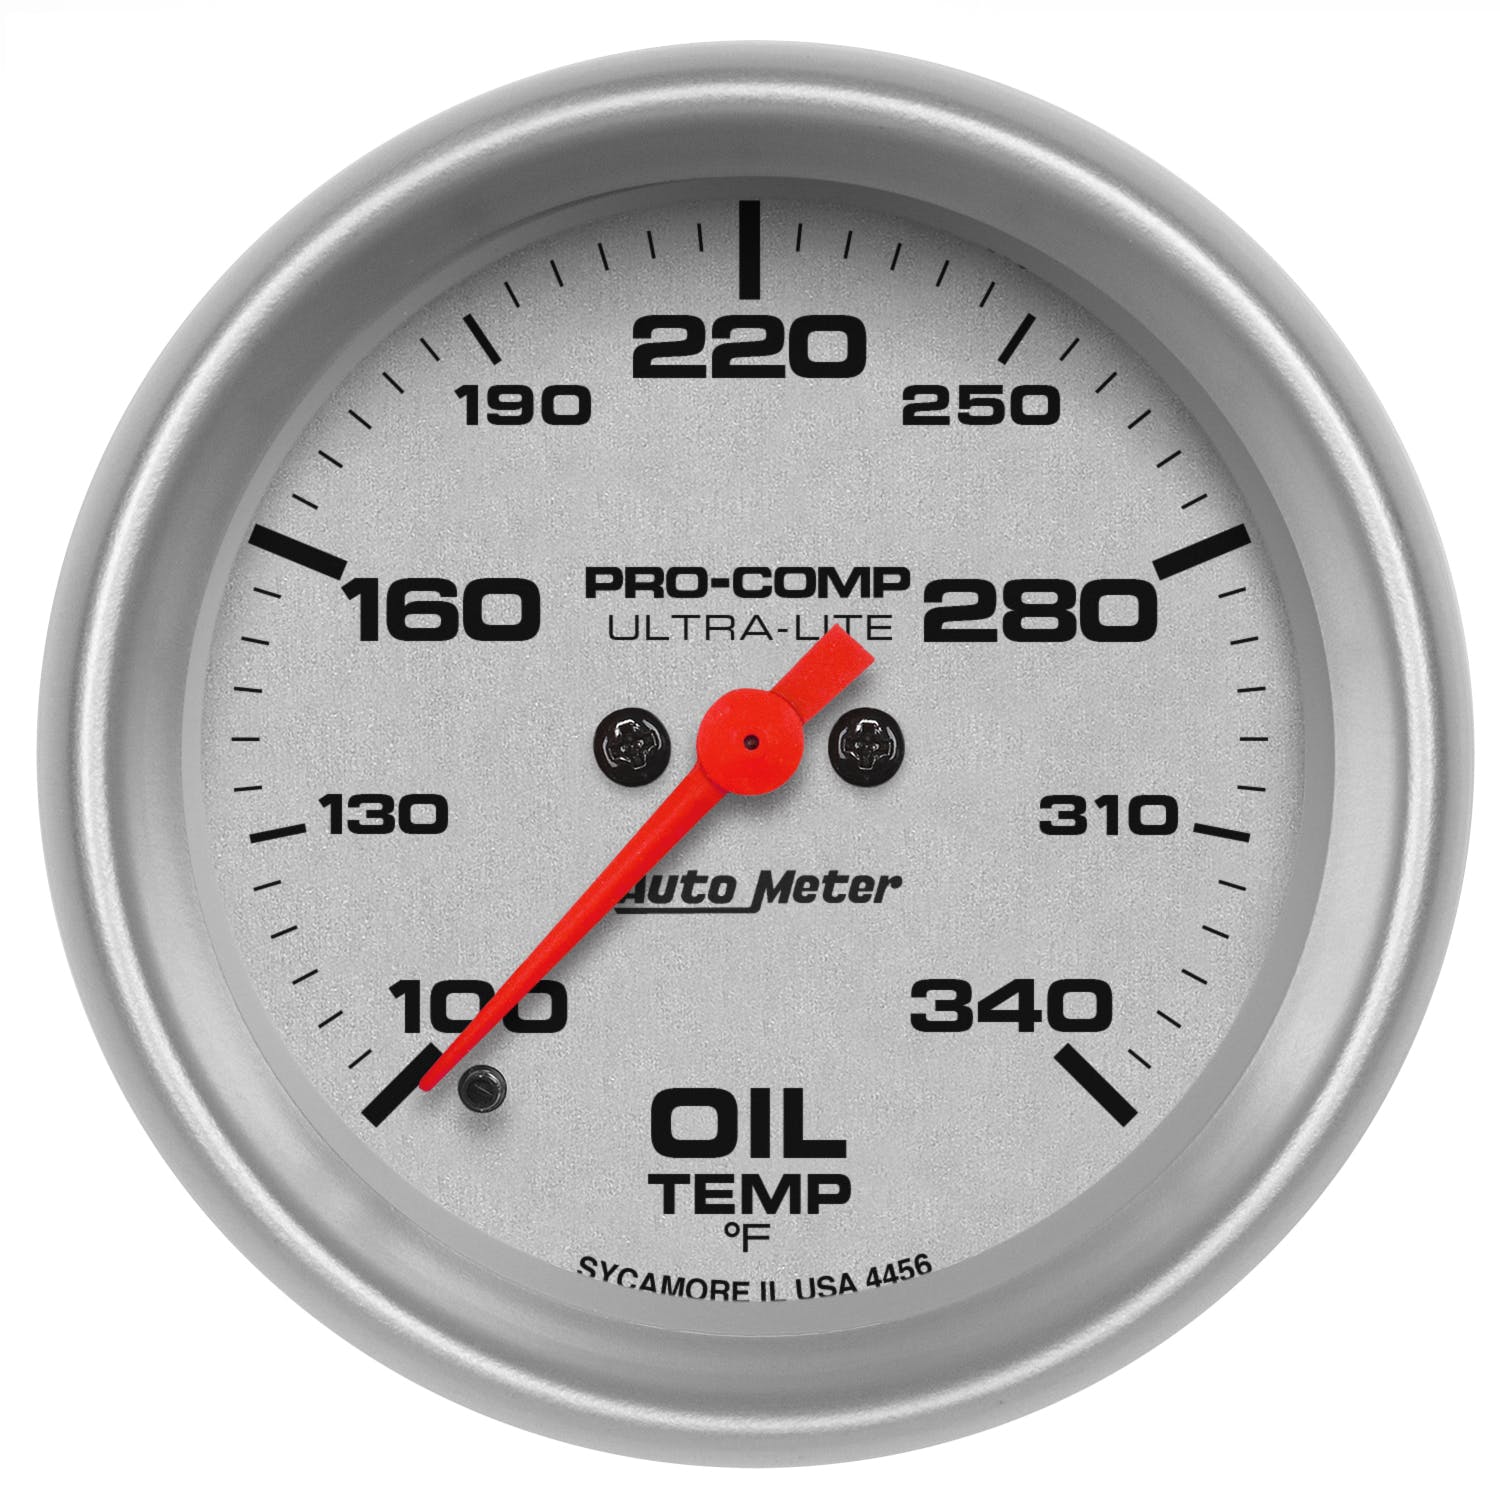 AutoMeter Products 4456 Oil Temperature Gauge, 2 5/8, 140-340° F, Digital Stepper Motor, Ultra-Lite